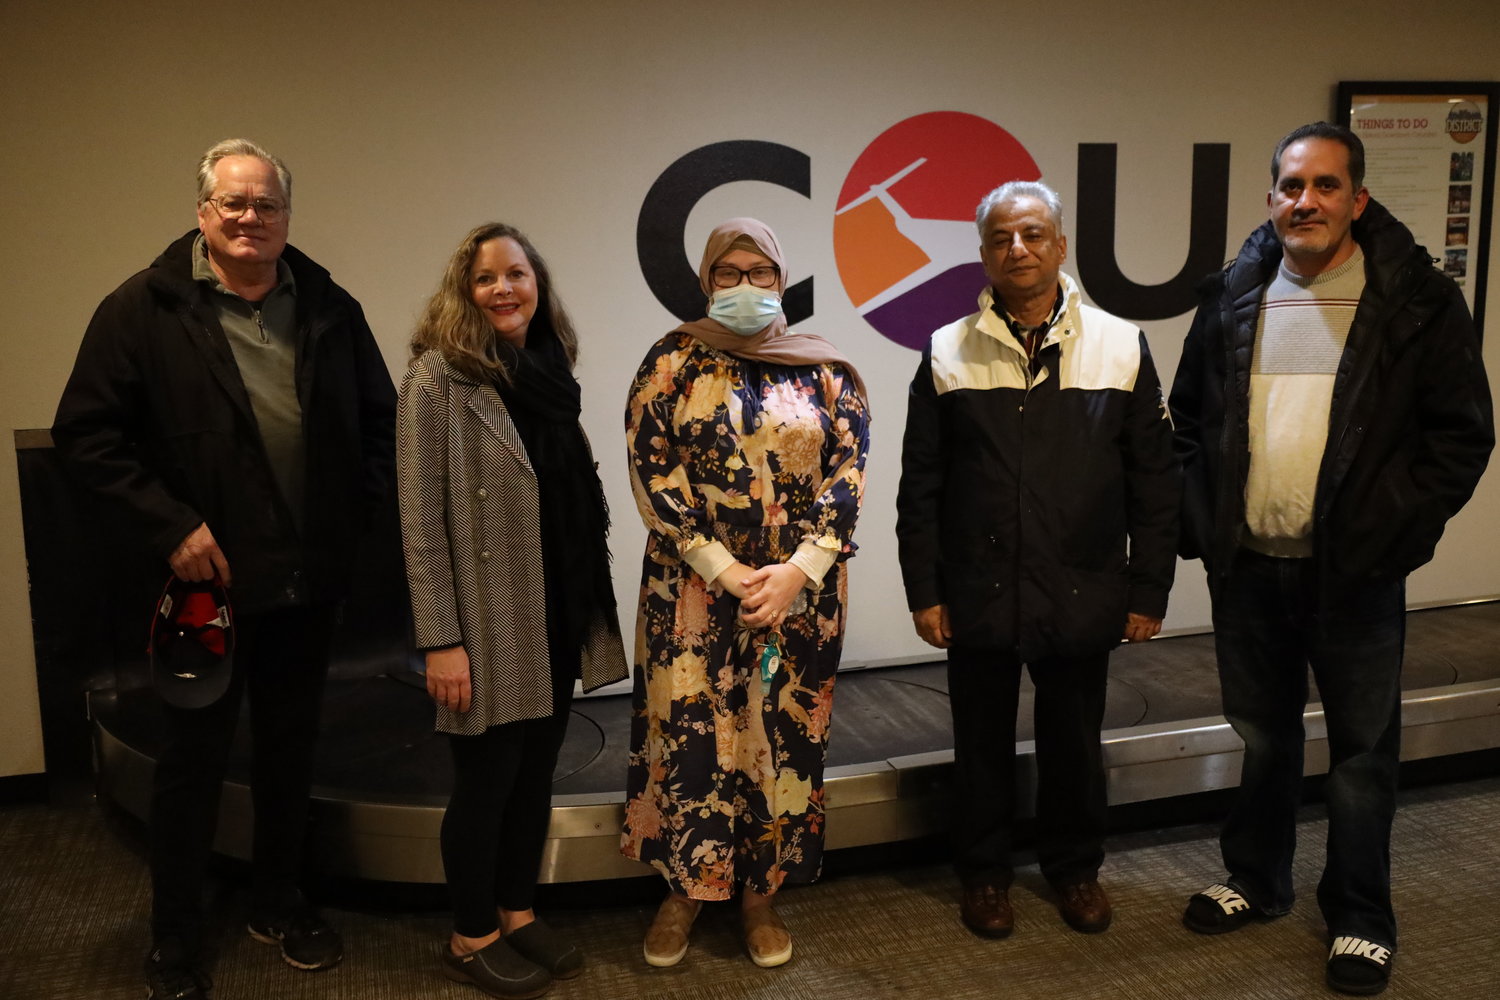 Members of the Catholic Charities ecumenical Community Sponsorship group awaits refugee arrivals at Columbia Regional Airport.